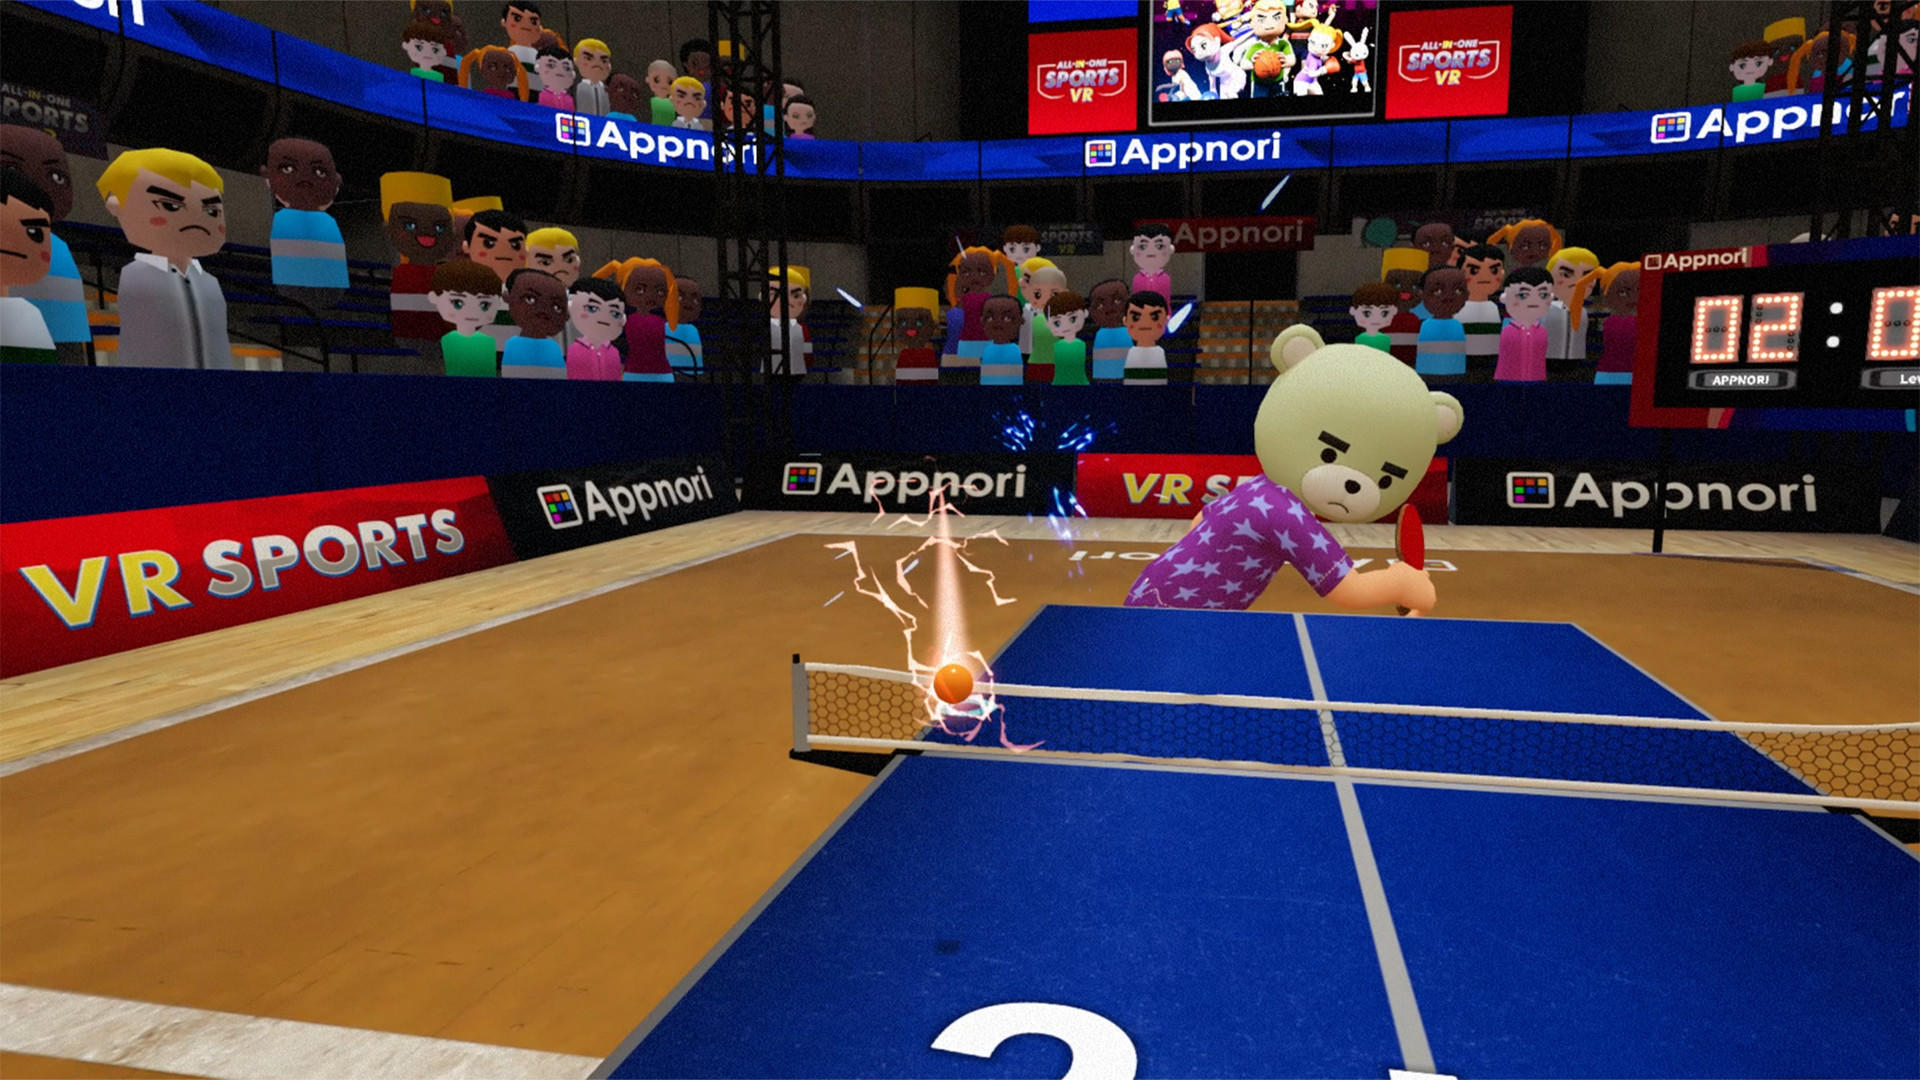 All-In-One Sports VR screenshot game